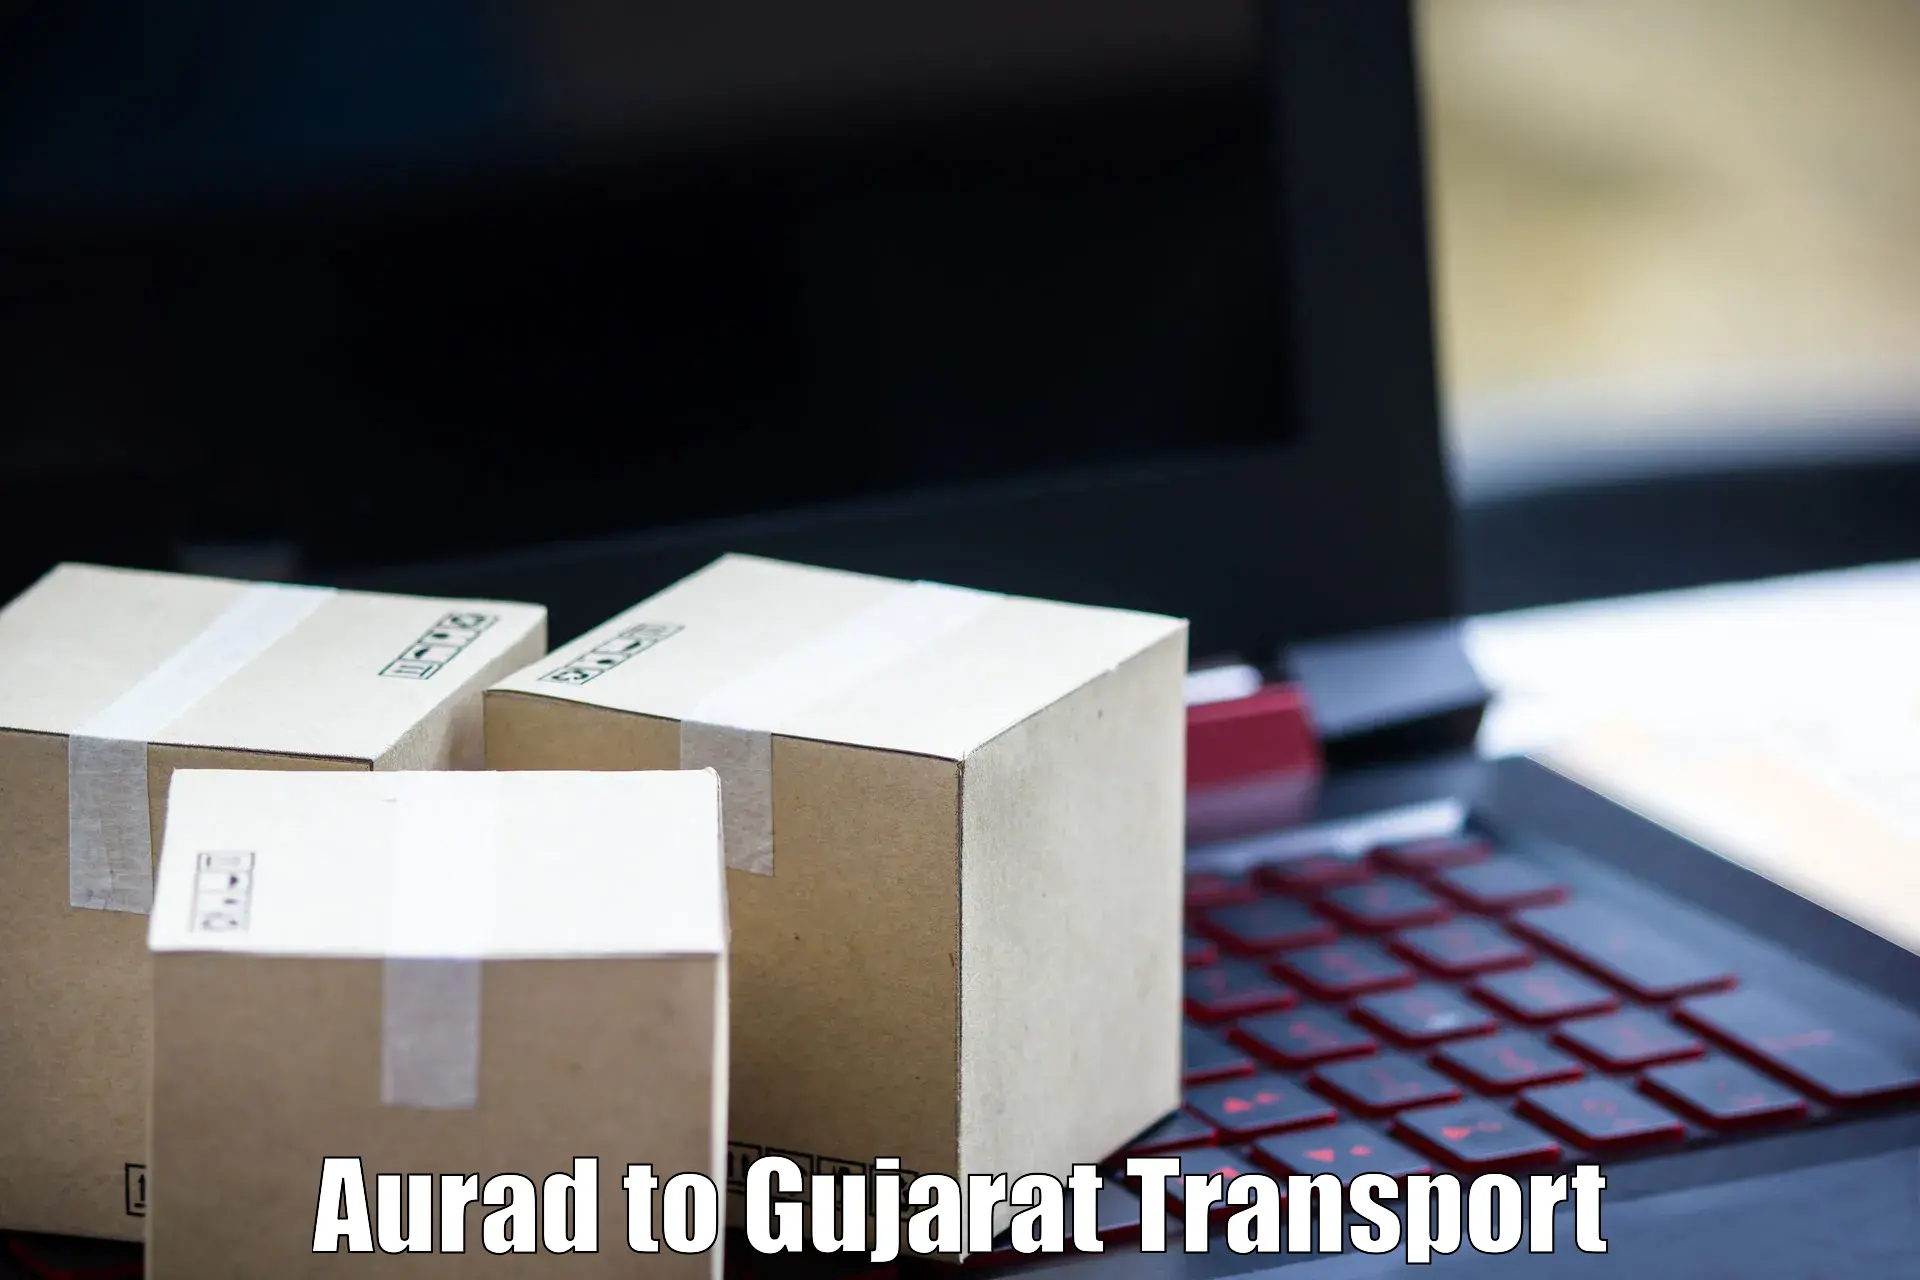 Furniture transport service Aurad to Ahmedabad